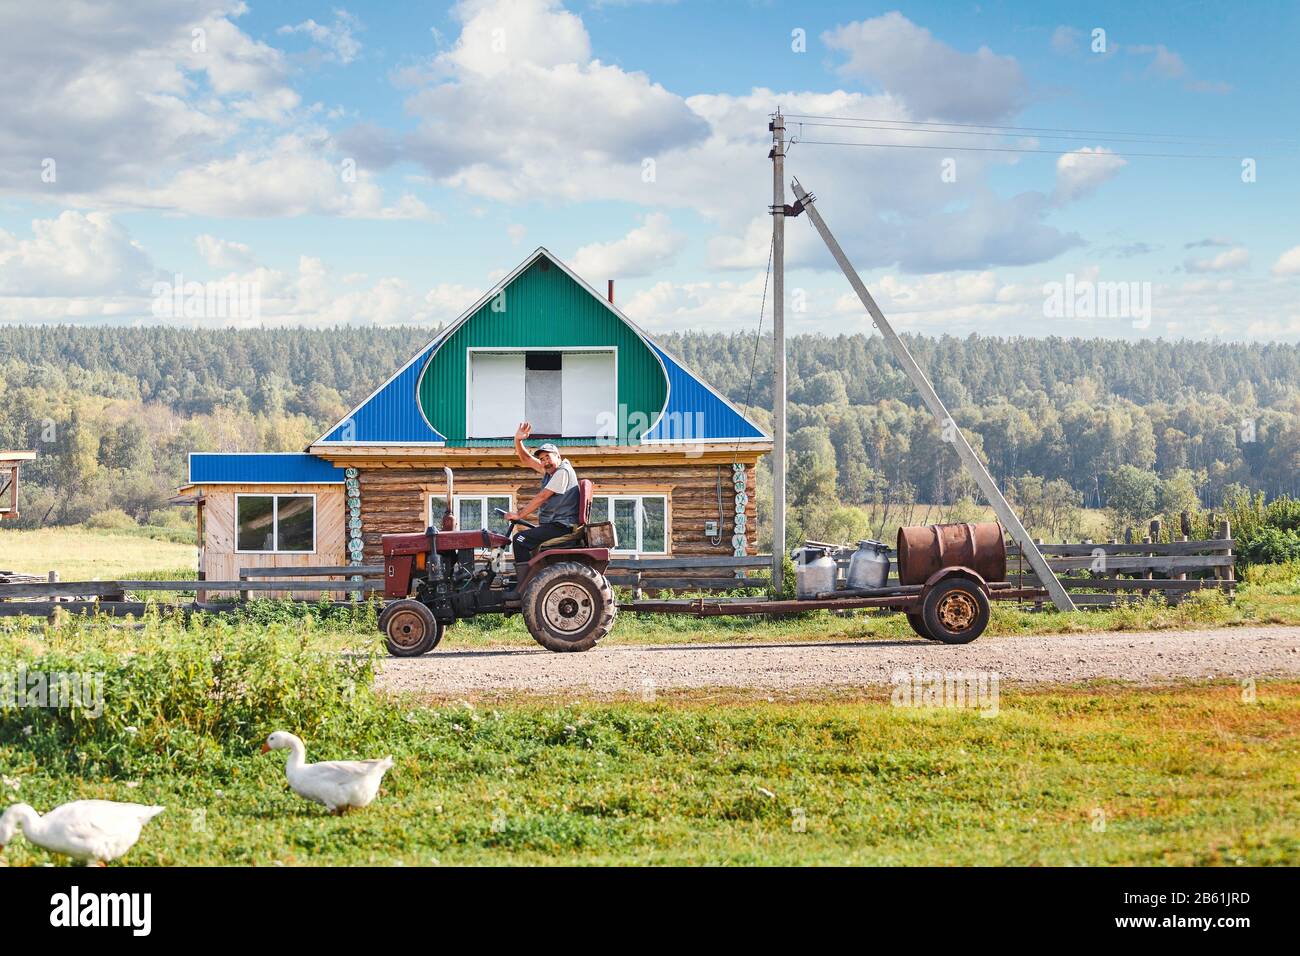 01 SEPTEMBER 2017, NIKOLAEVKA VILLAGE, BASHKORTOSTAN, RUSSIA: Man farmer rides on an old tractor in the village Stock Photo